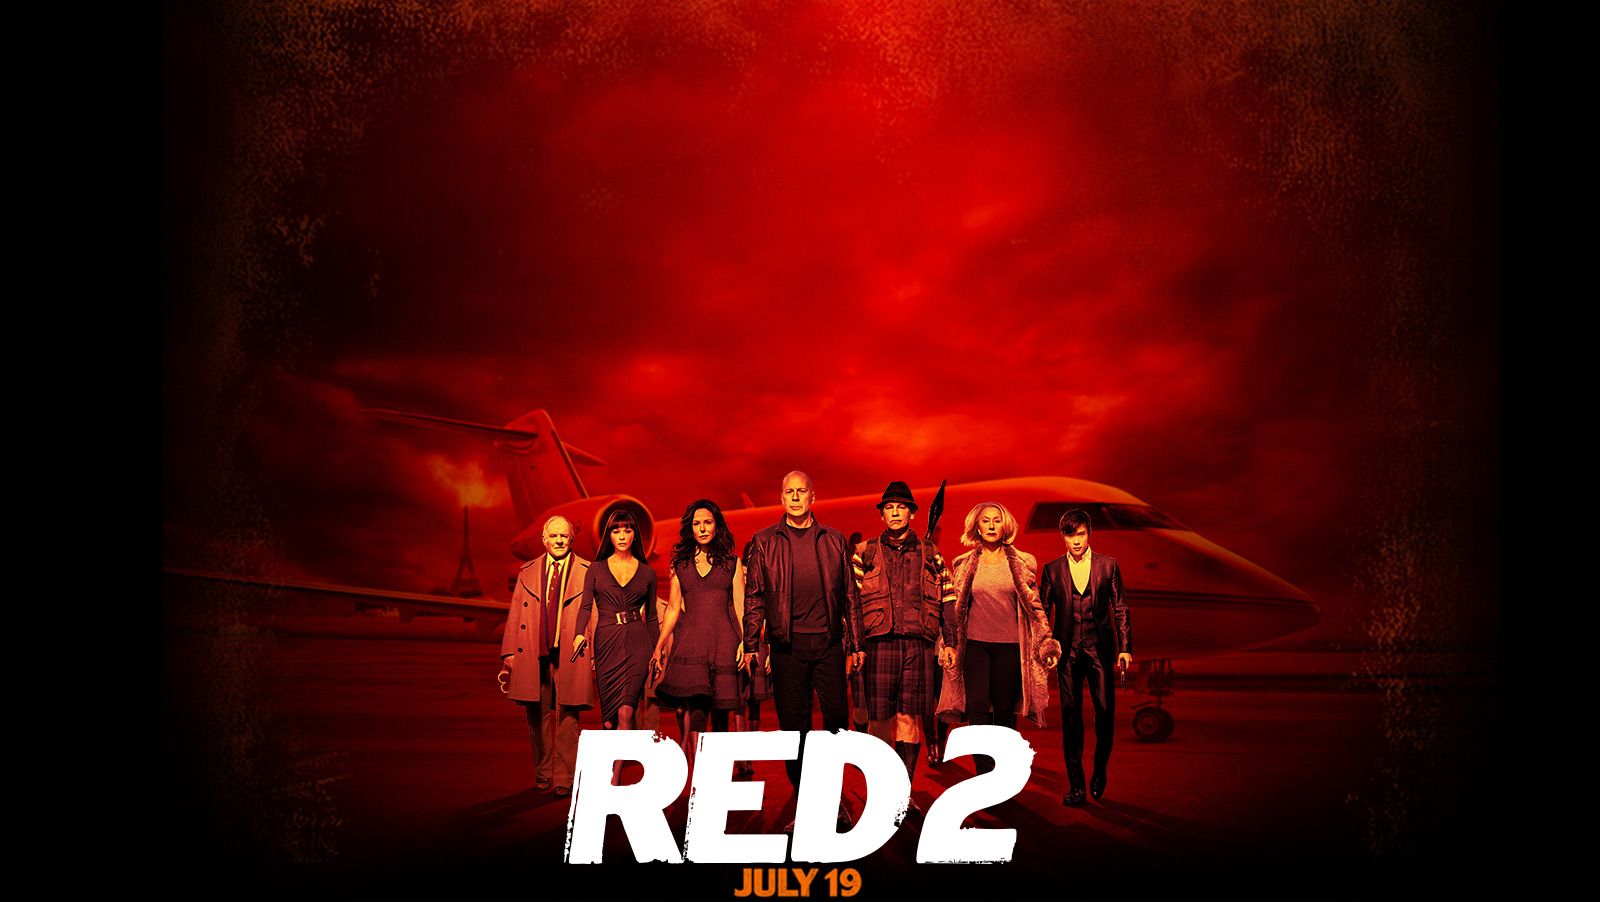 Free download Red 2 Movie Background Wallpaper Red 2 Movie